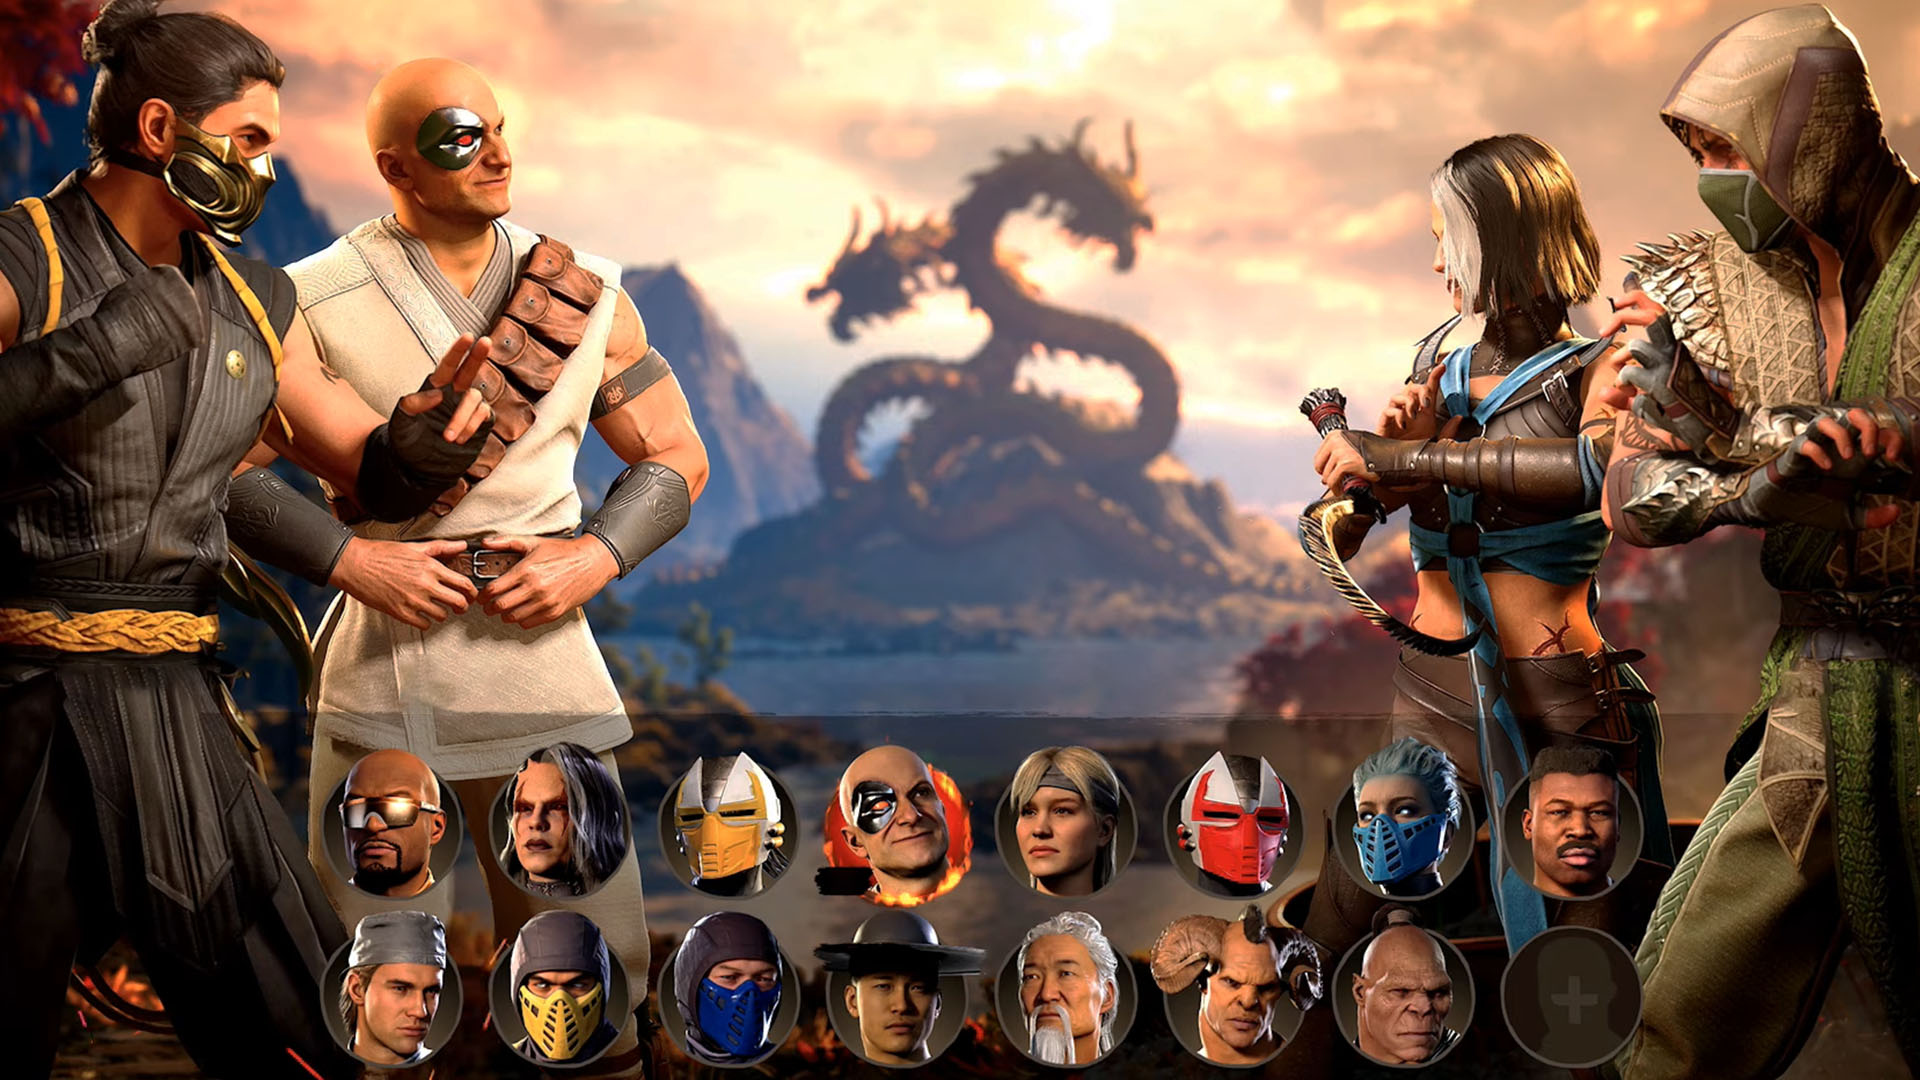 MK1 Shang Tsung - Mortal Kombat Online